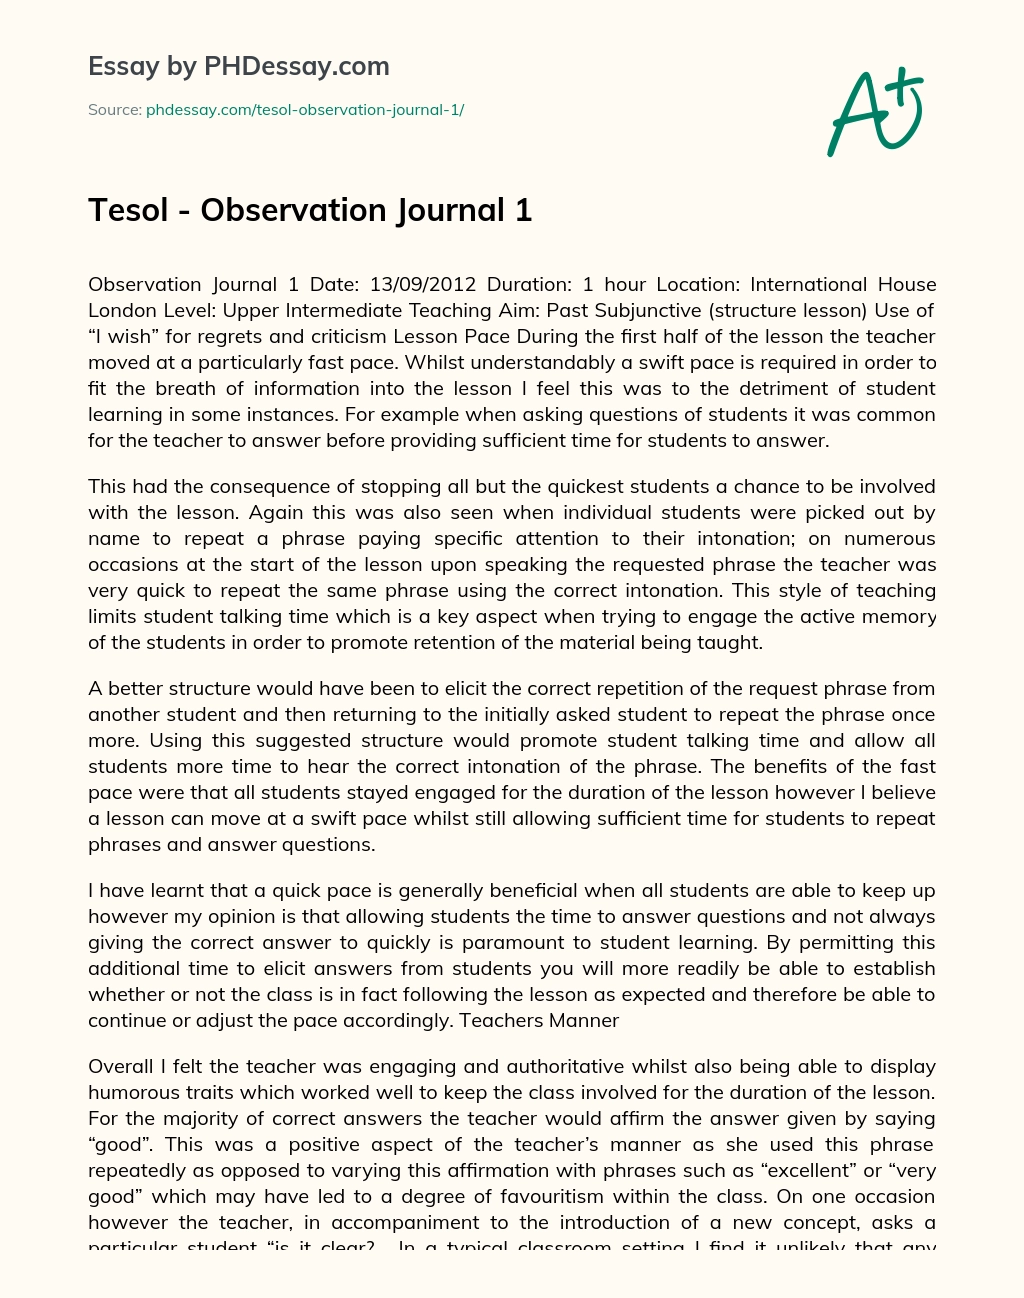 Tesol – Observation Journal 1 essay